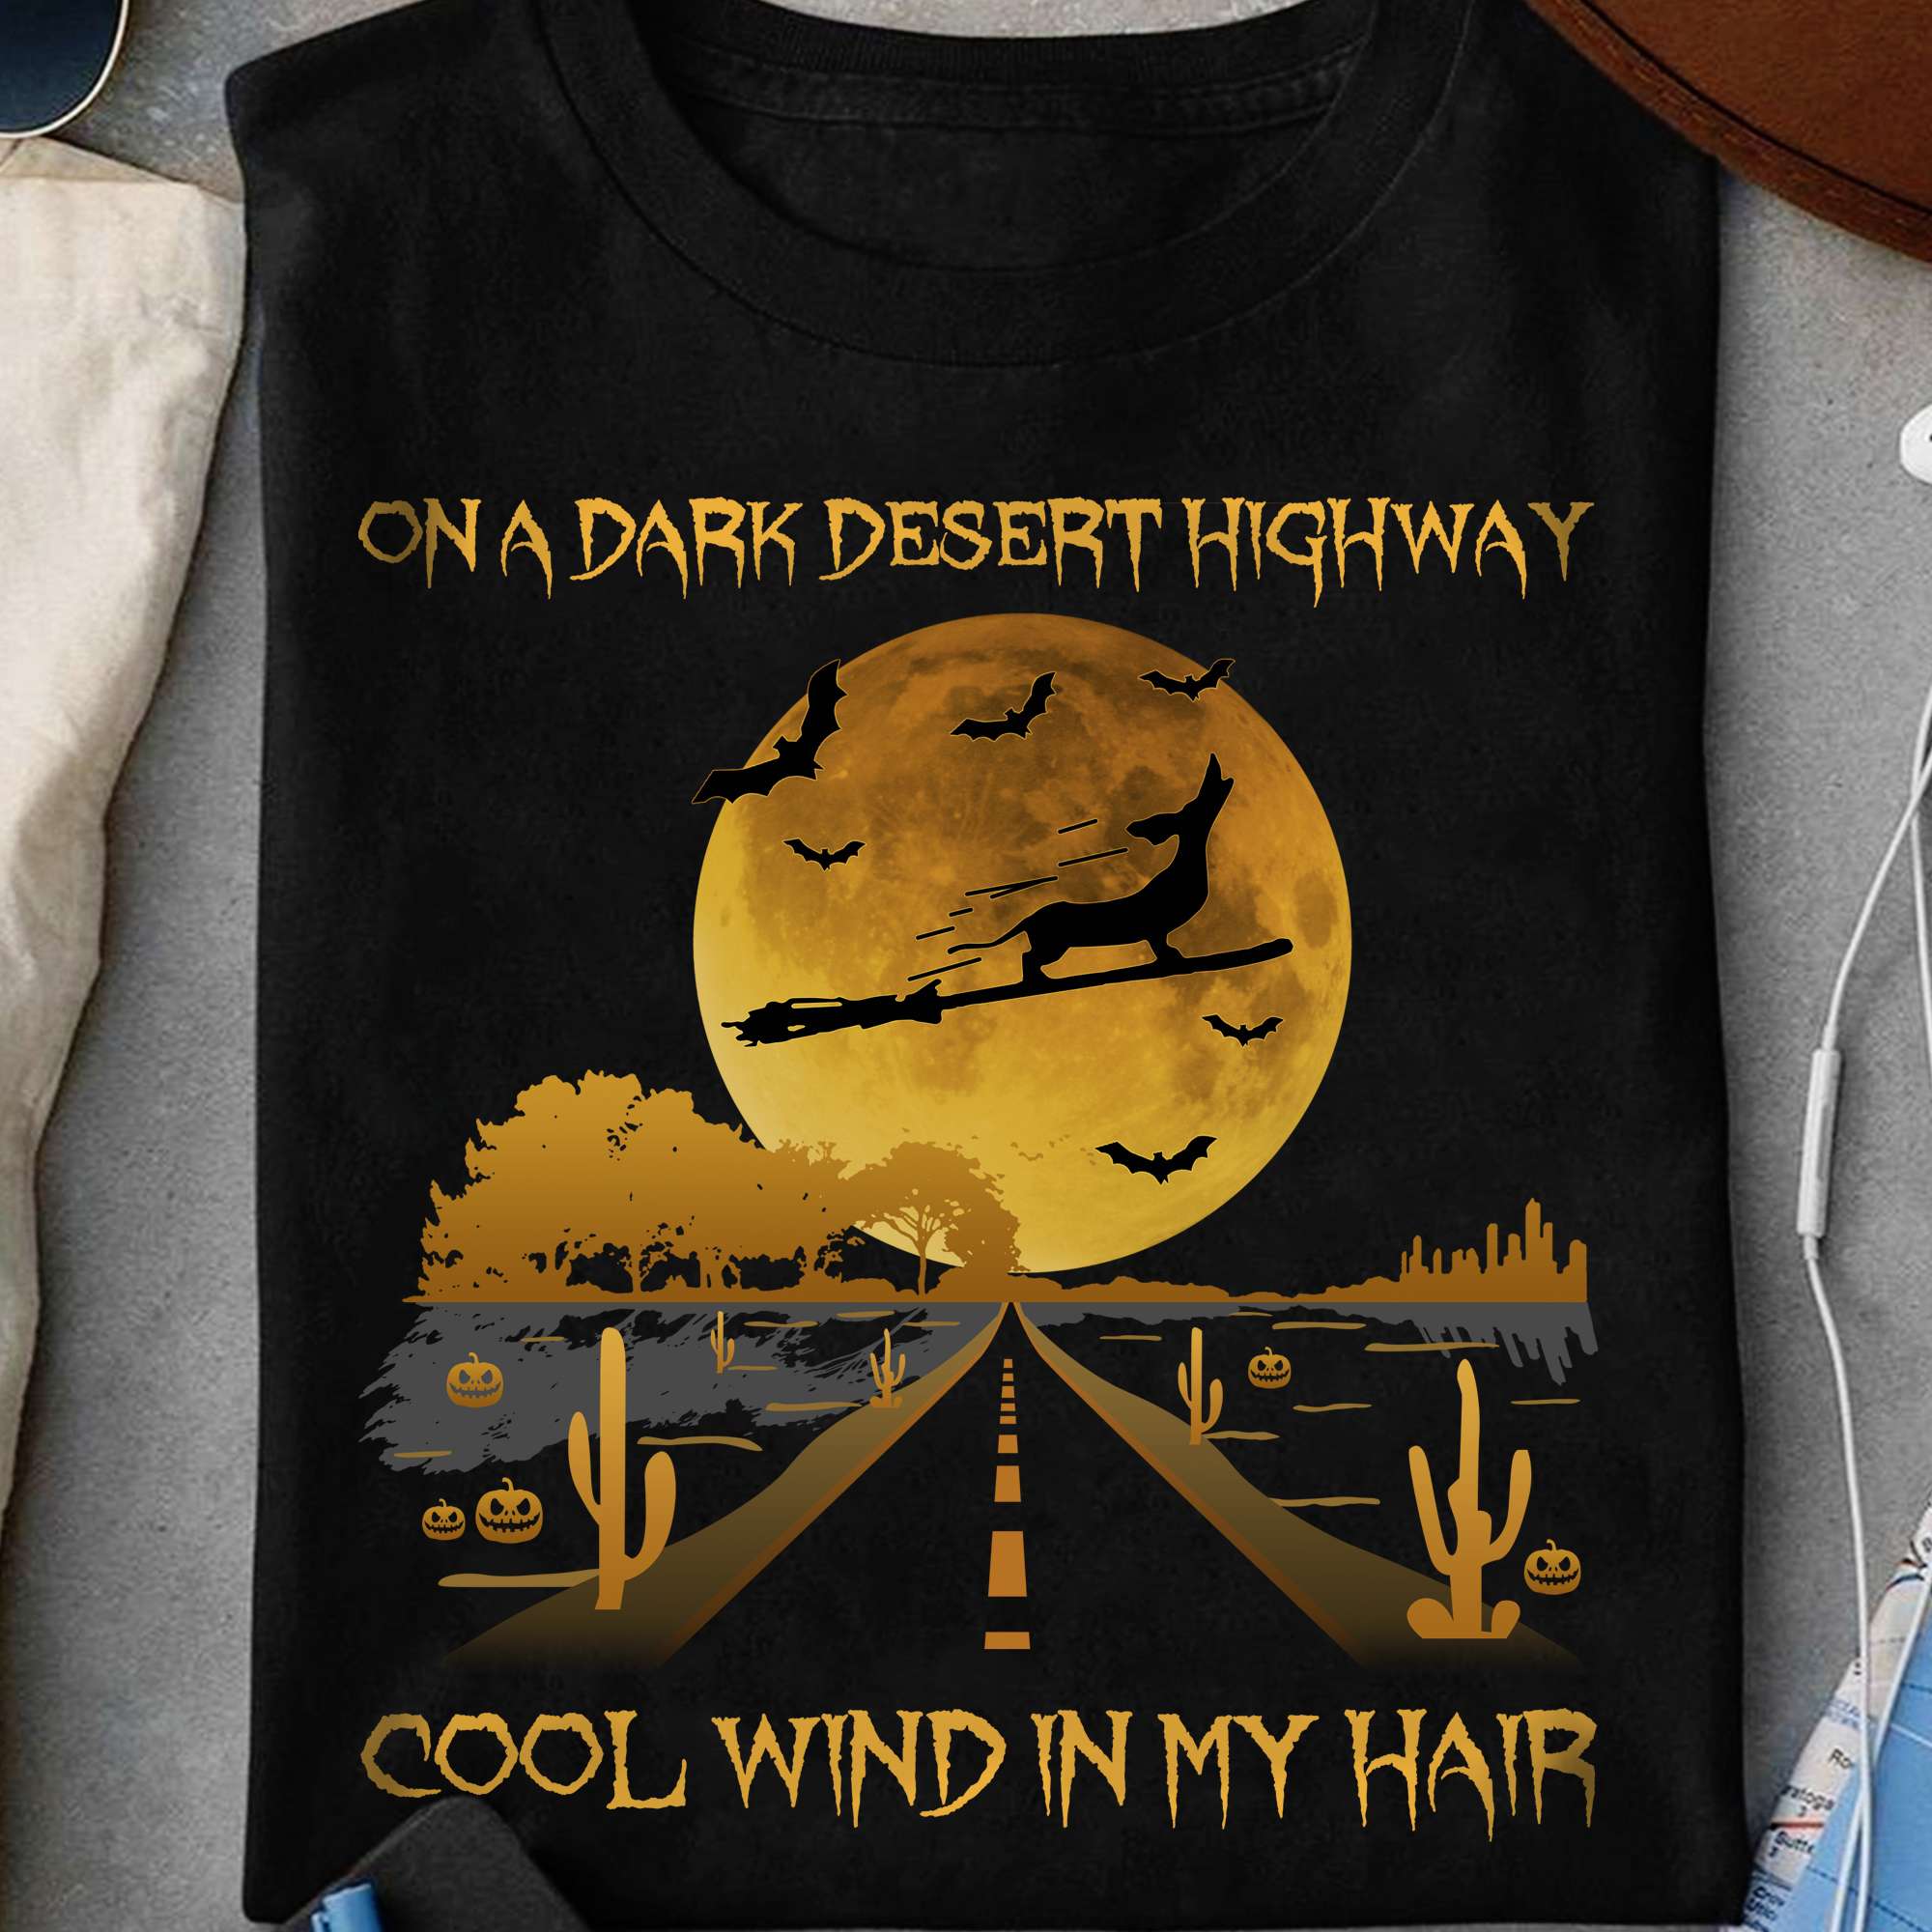 Dachshund Ride Broom - On a dark desert highway cool wind in my hair